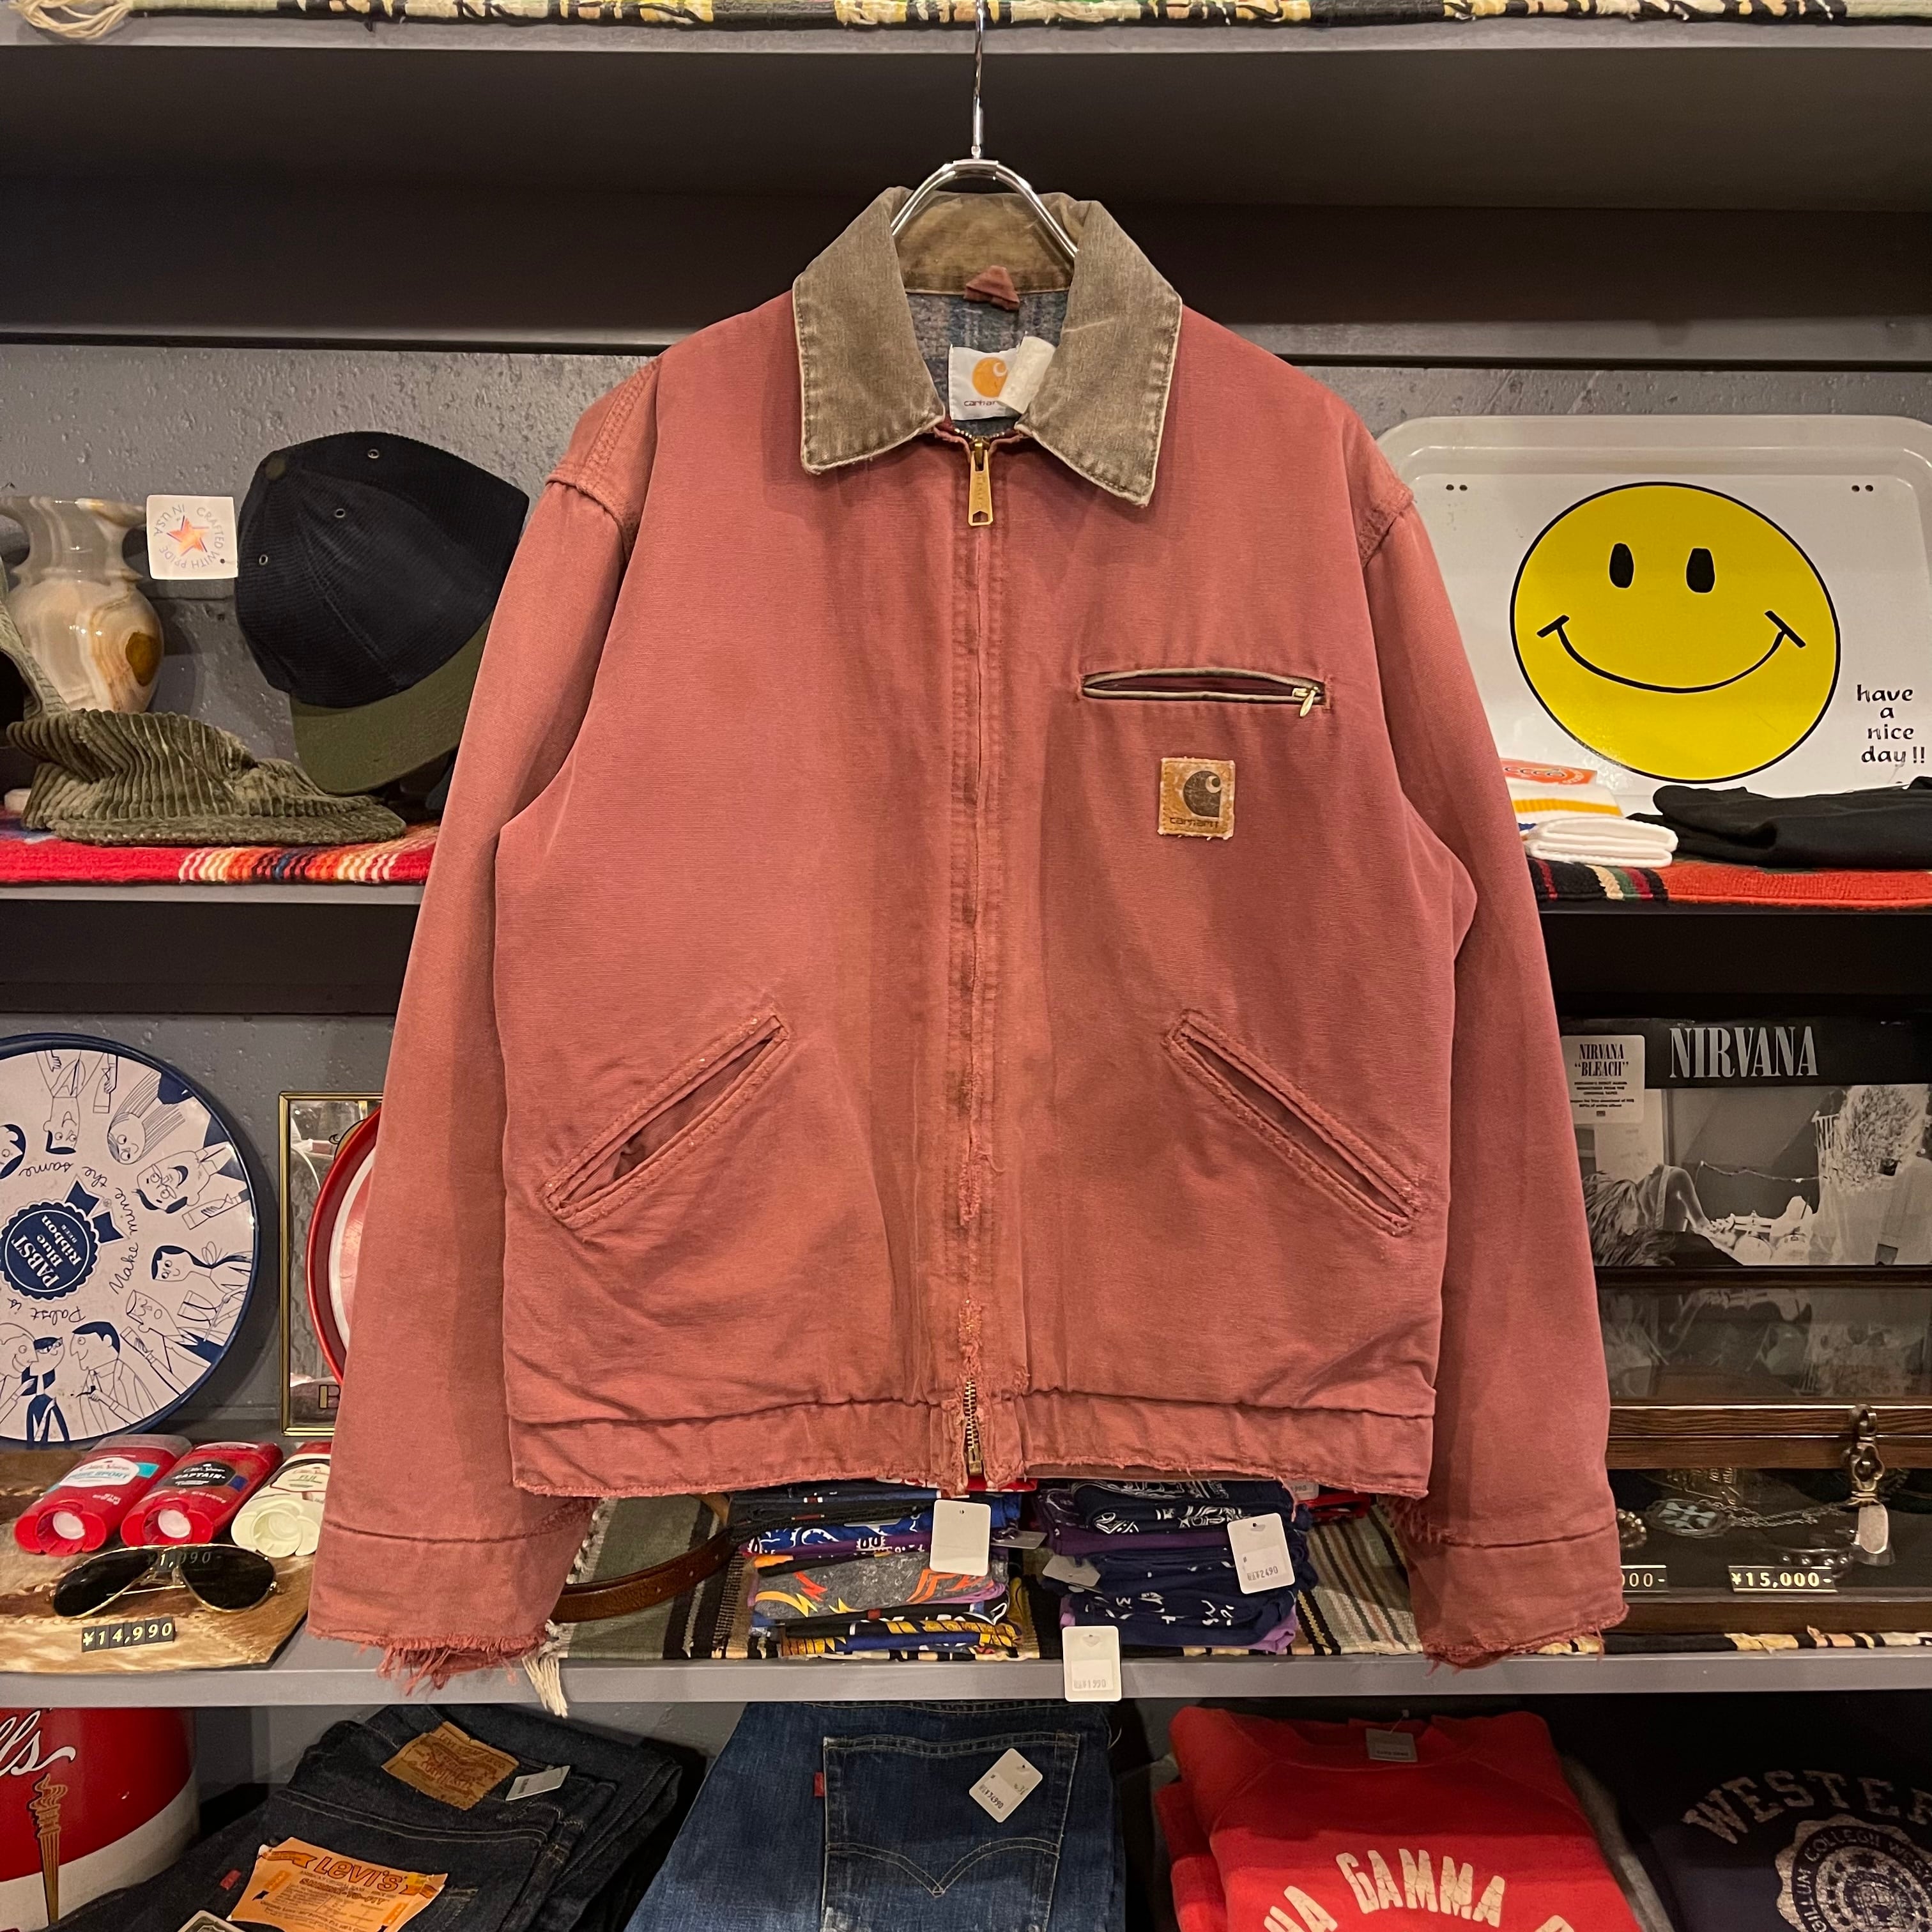 80s Carhartt detroit jacket デトロイトジャケット